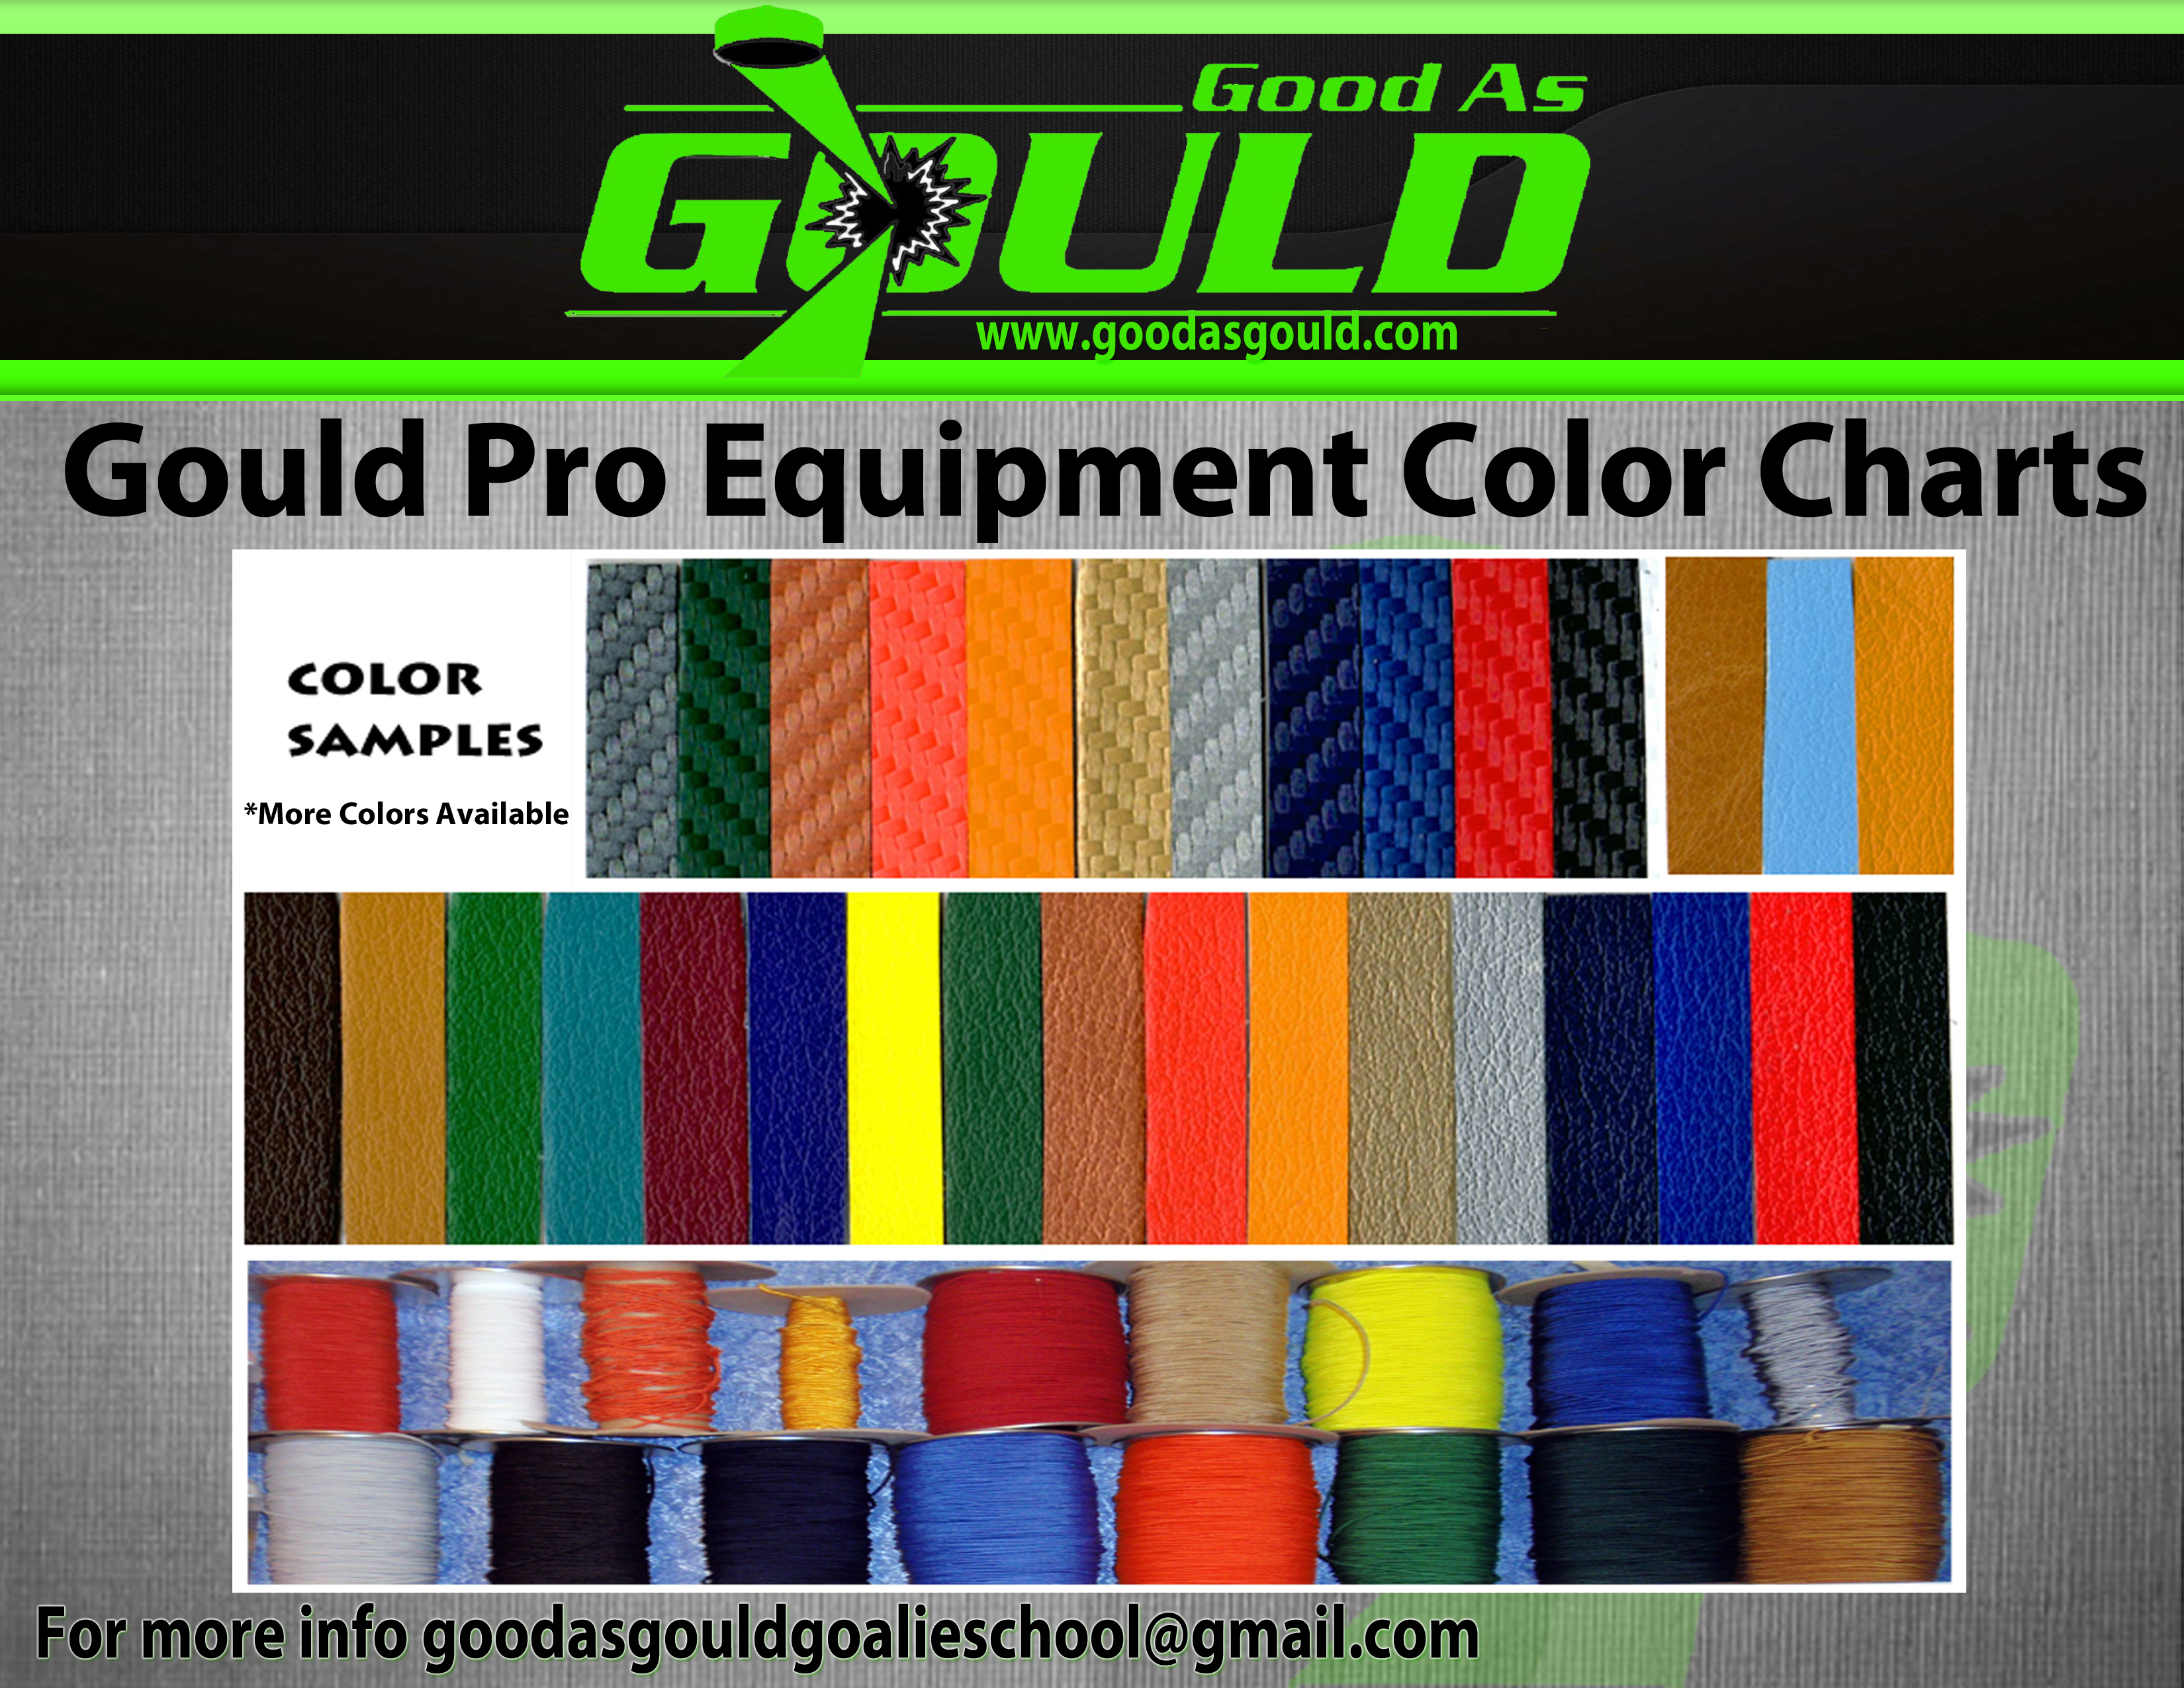 Gould Pro Equipment Color Charts